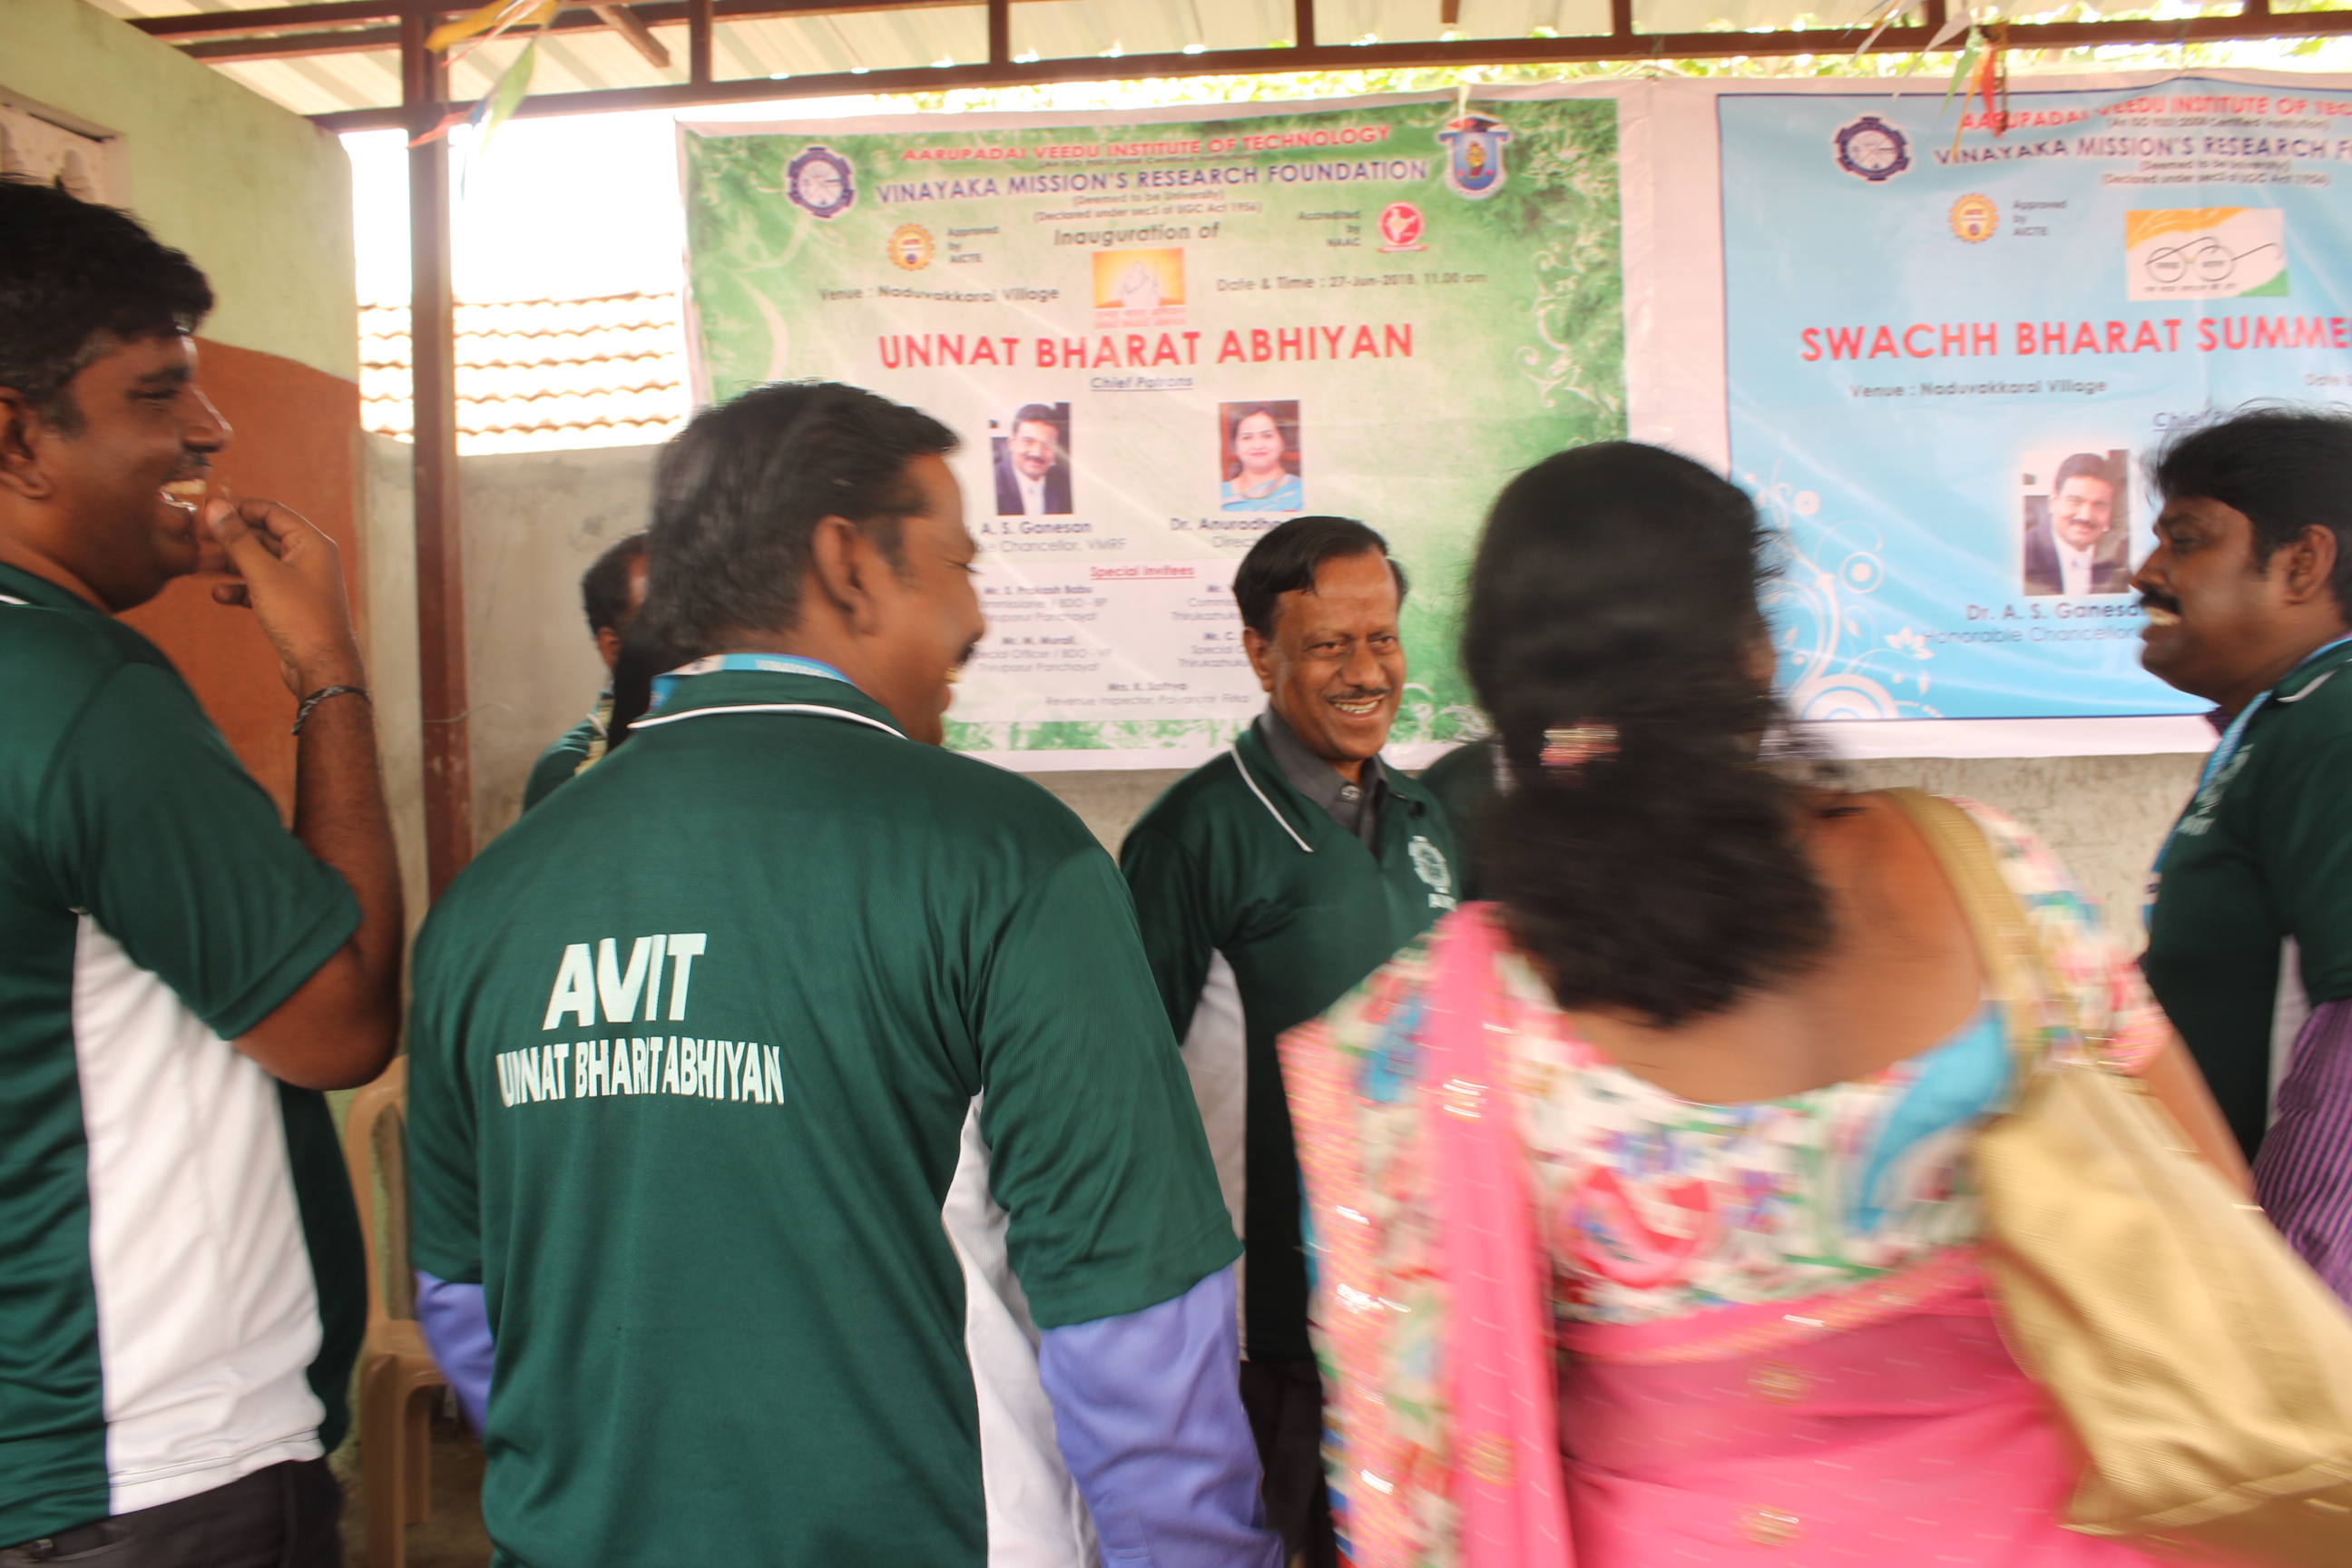 AVIT members in the Unnat Bharat Abhiyan Programme
